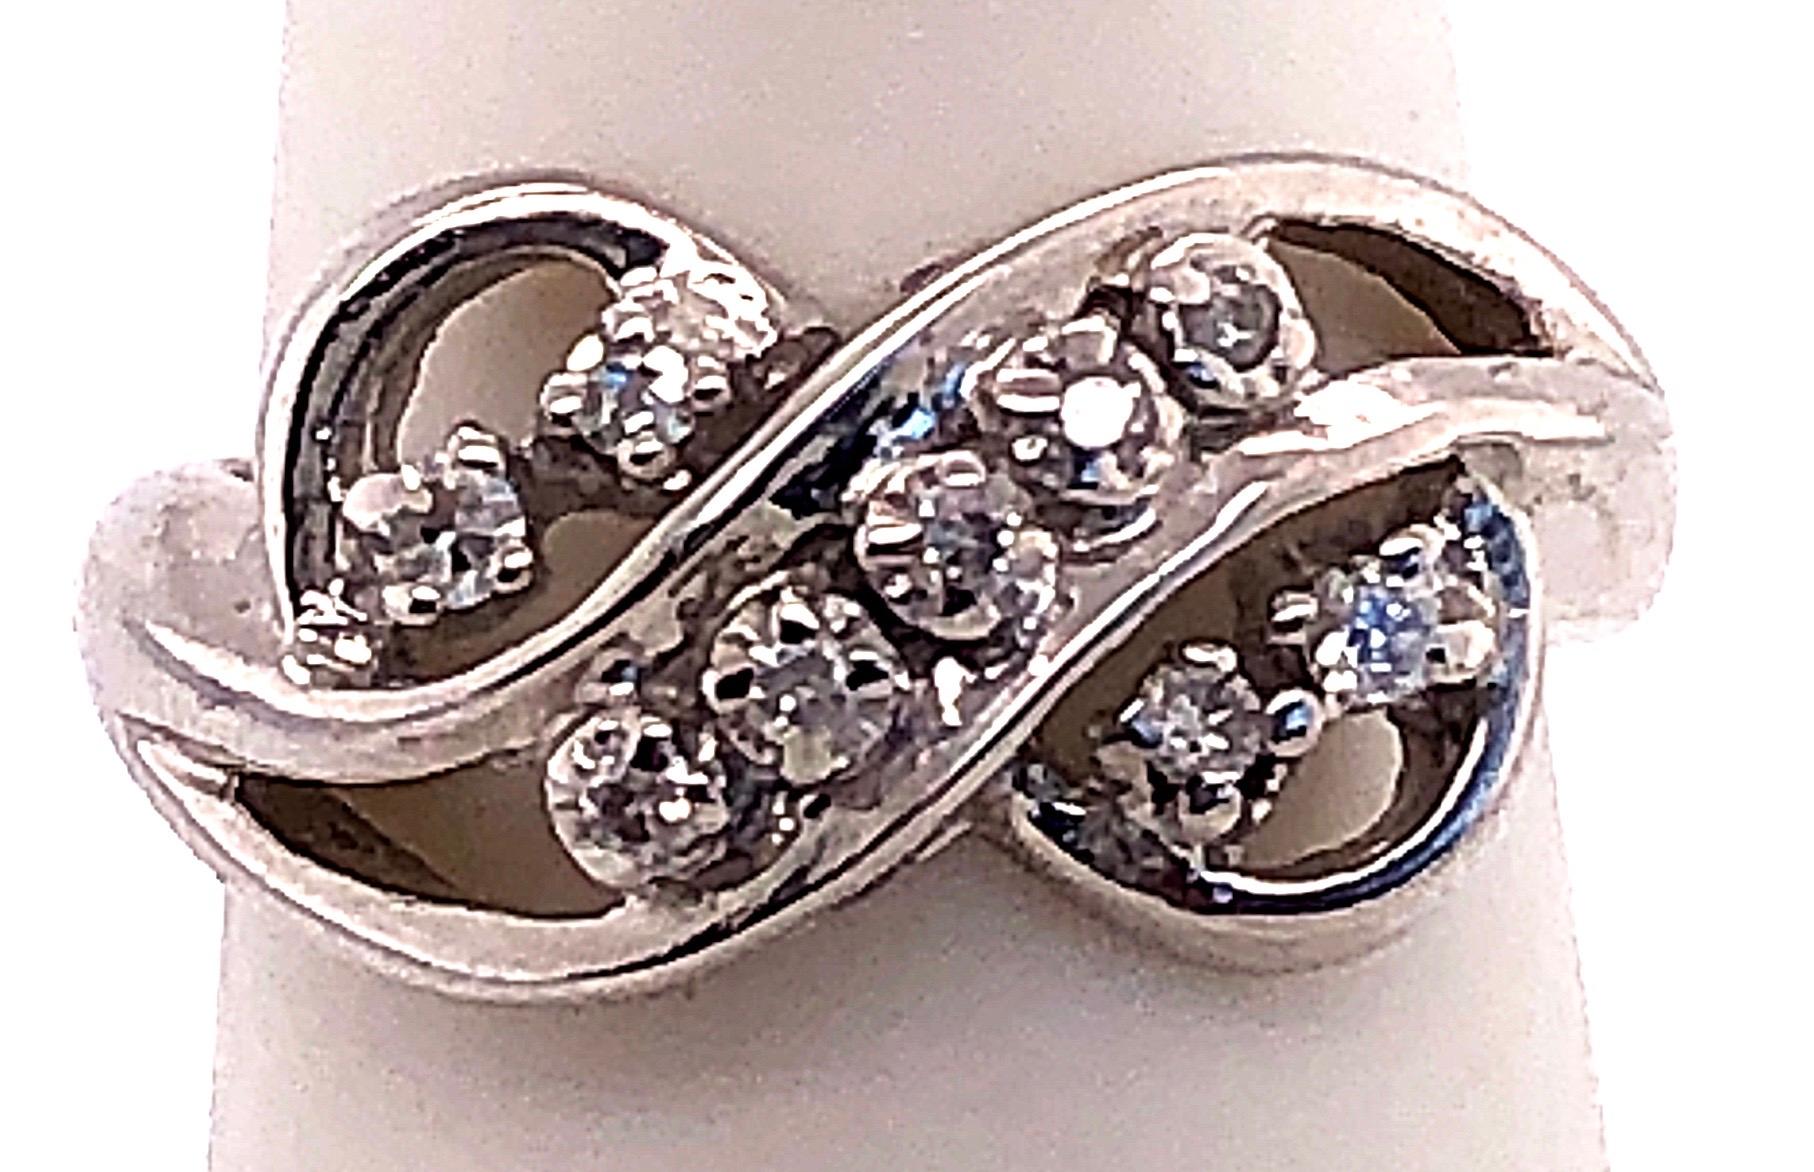 14 Karat White Gold And Diamond Swirl Ring
0.10 total diamond weight.
size 5
3.56 grams total weight.